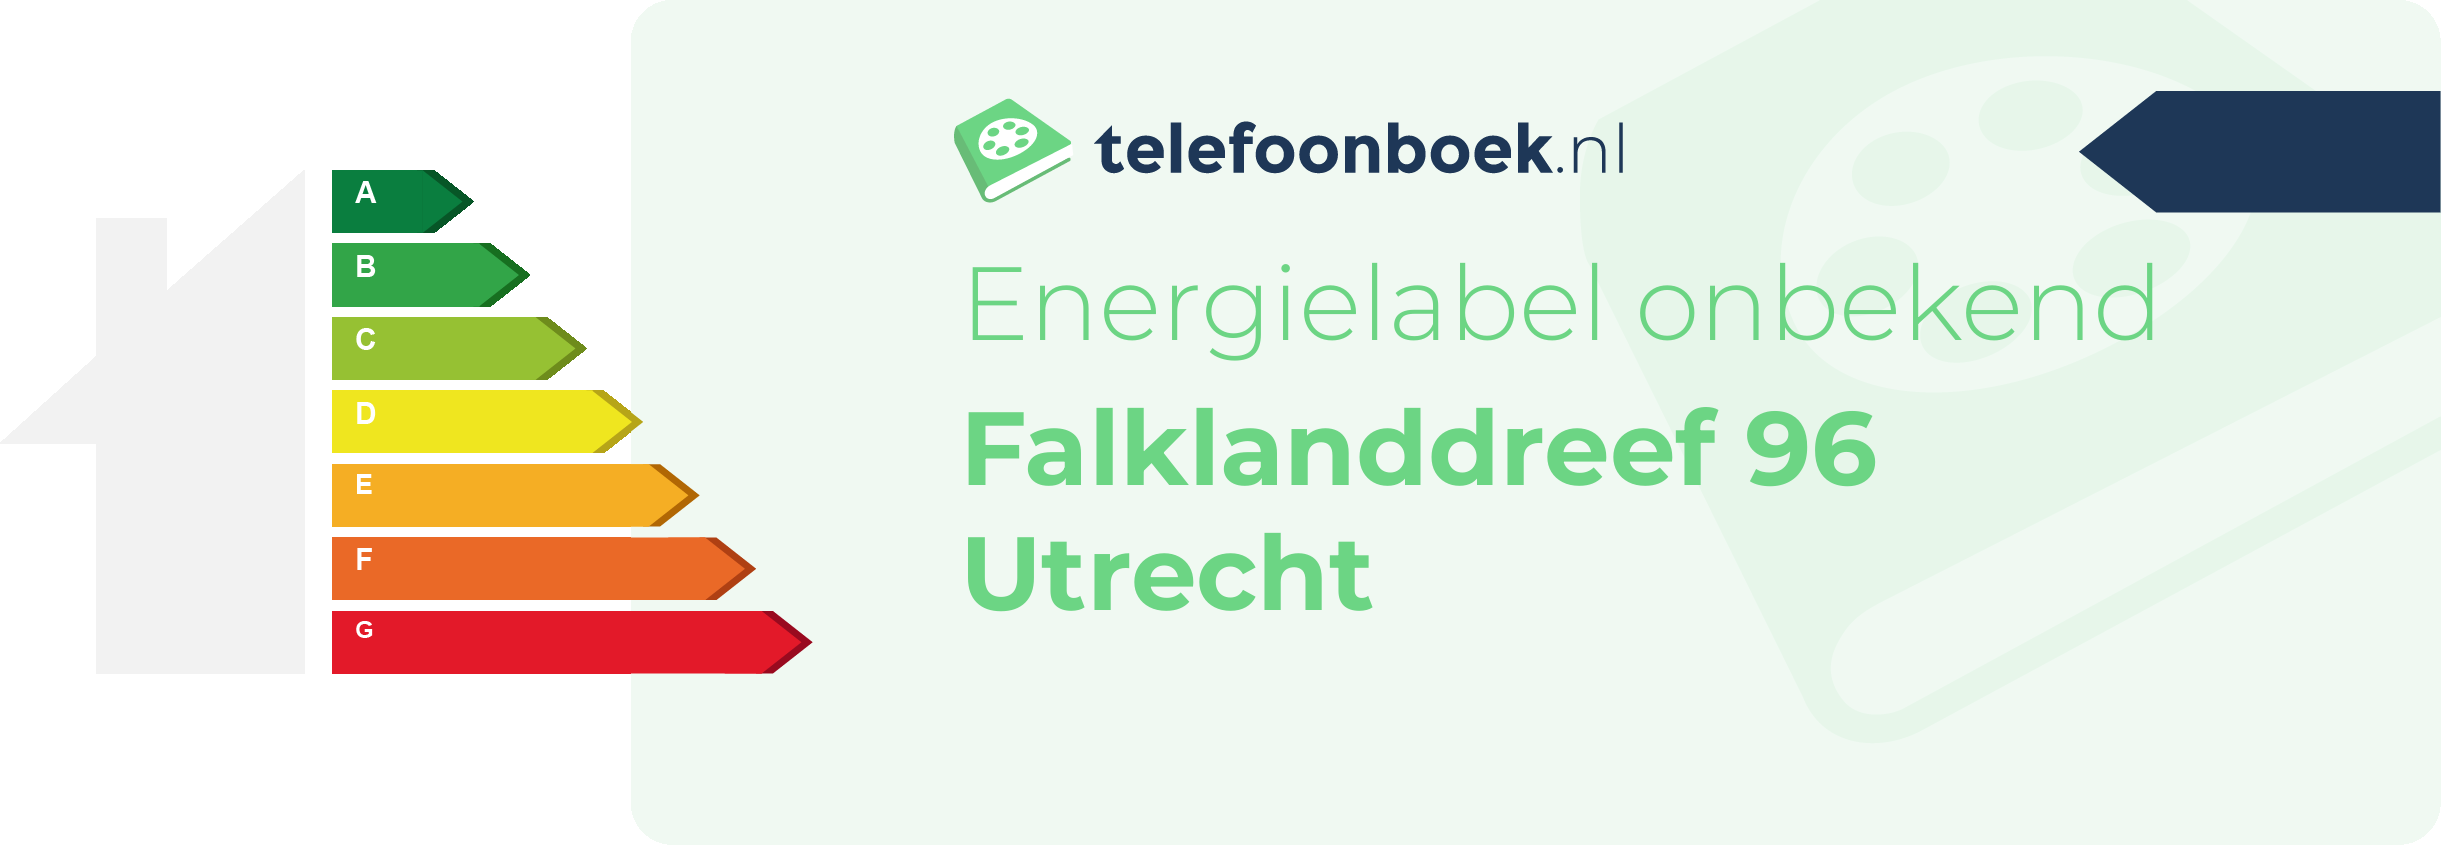 Energielabel Falklanddreef 96 Utrecht